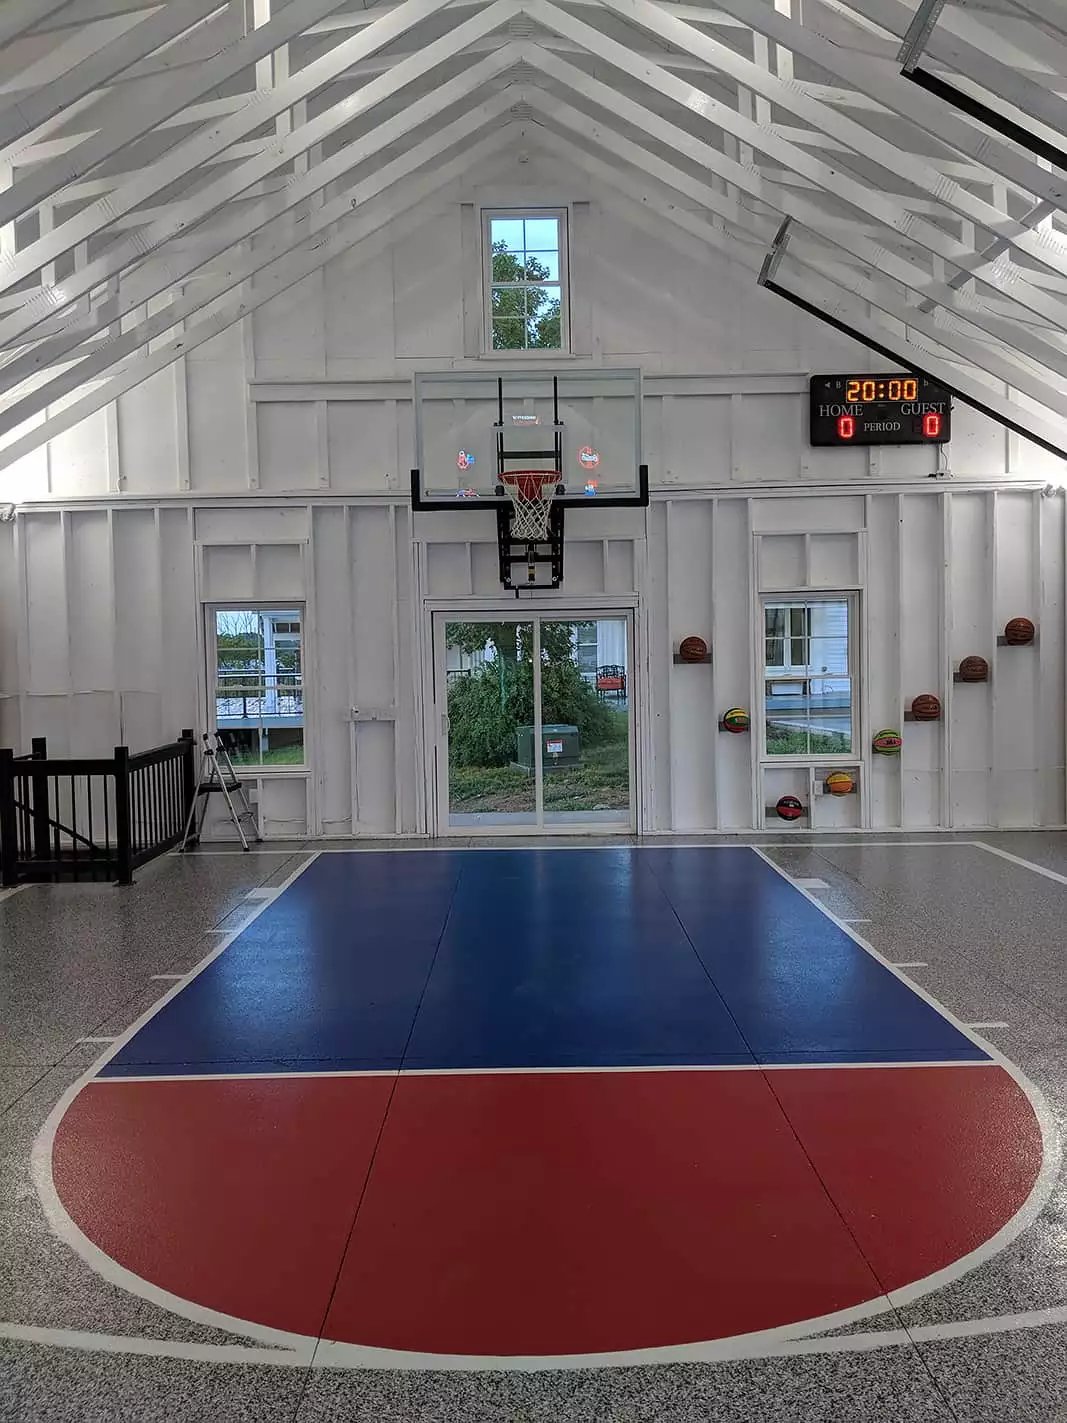 xhome-gym-basketball-court-garage-living.jpg.pagespeed.ic.AMK0TRCJE2